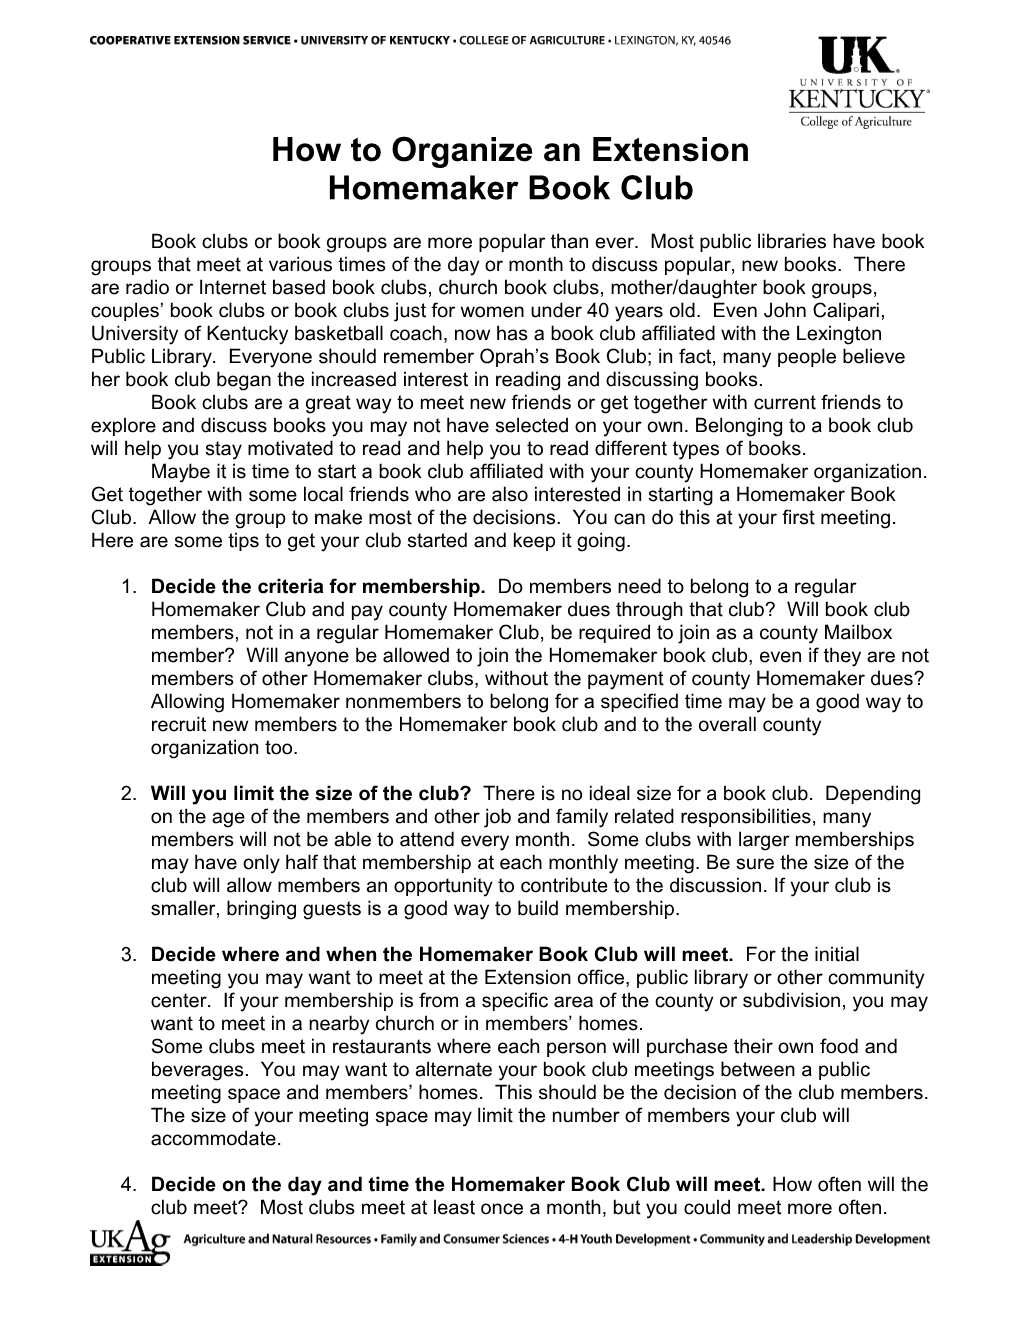 How to Organizean Extension Homemaker Book Club